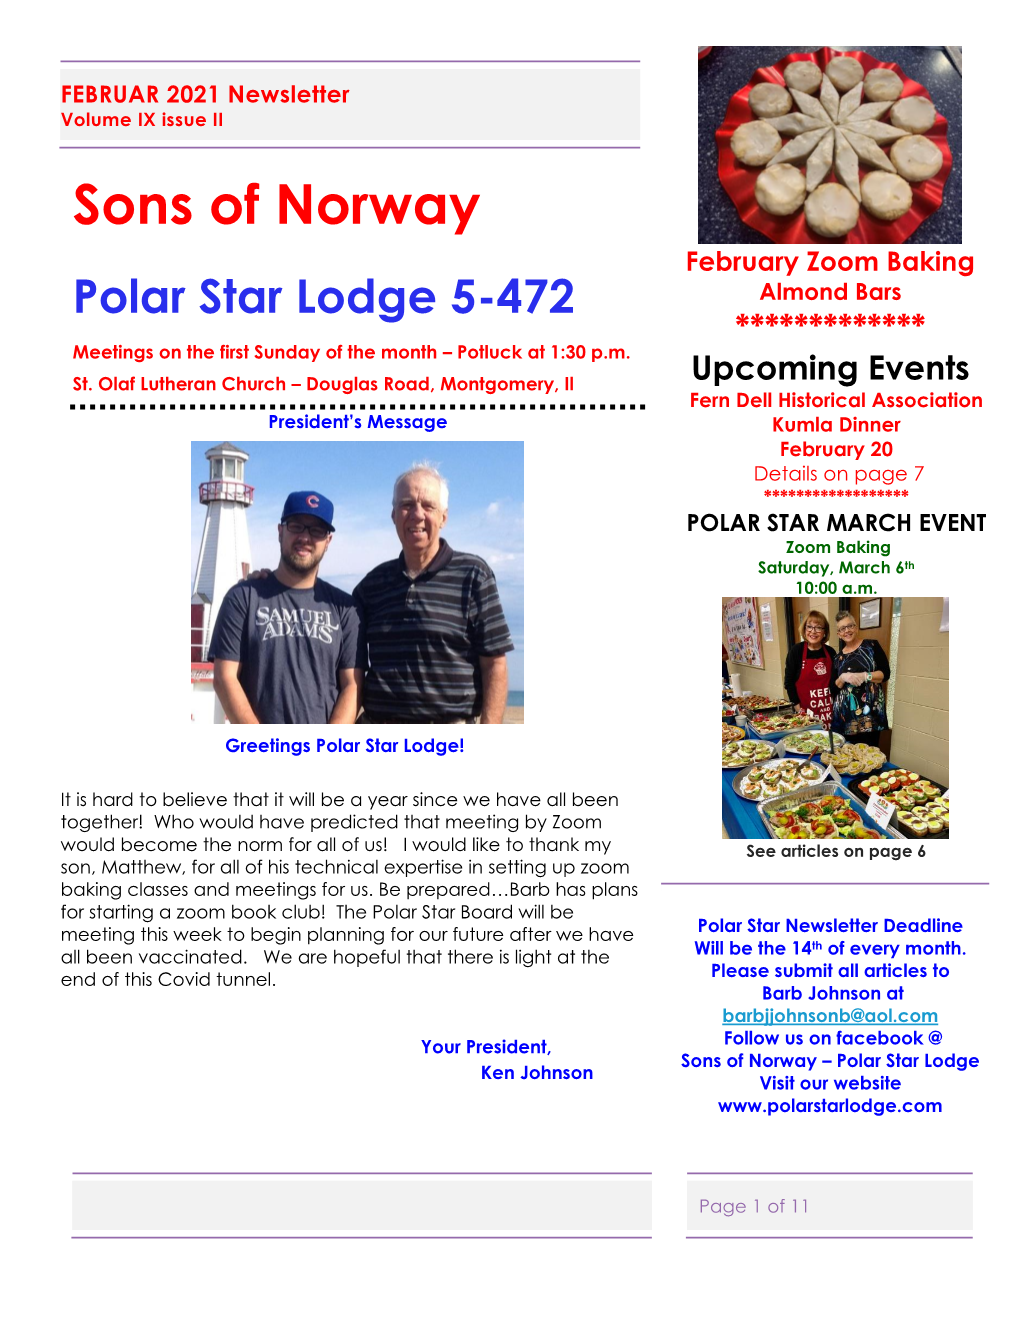 Polar Star Newsletter Deadline Th All Been Vaccinated